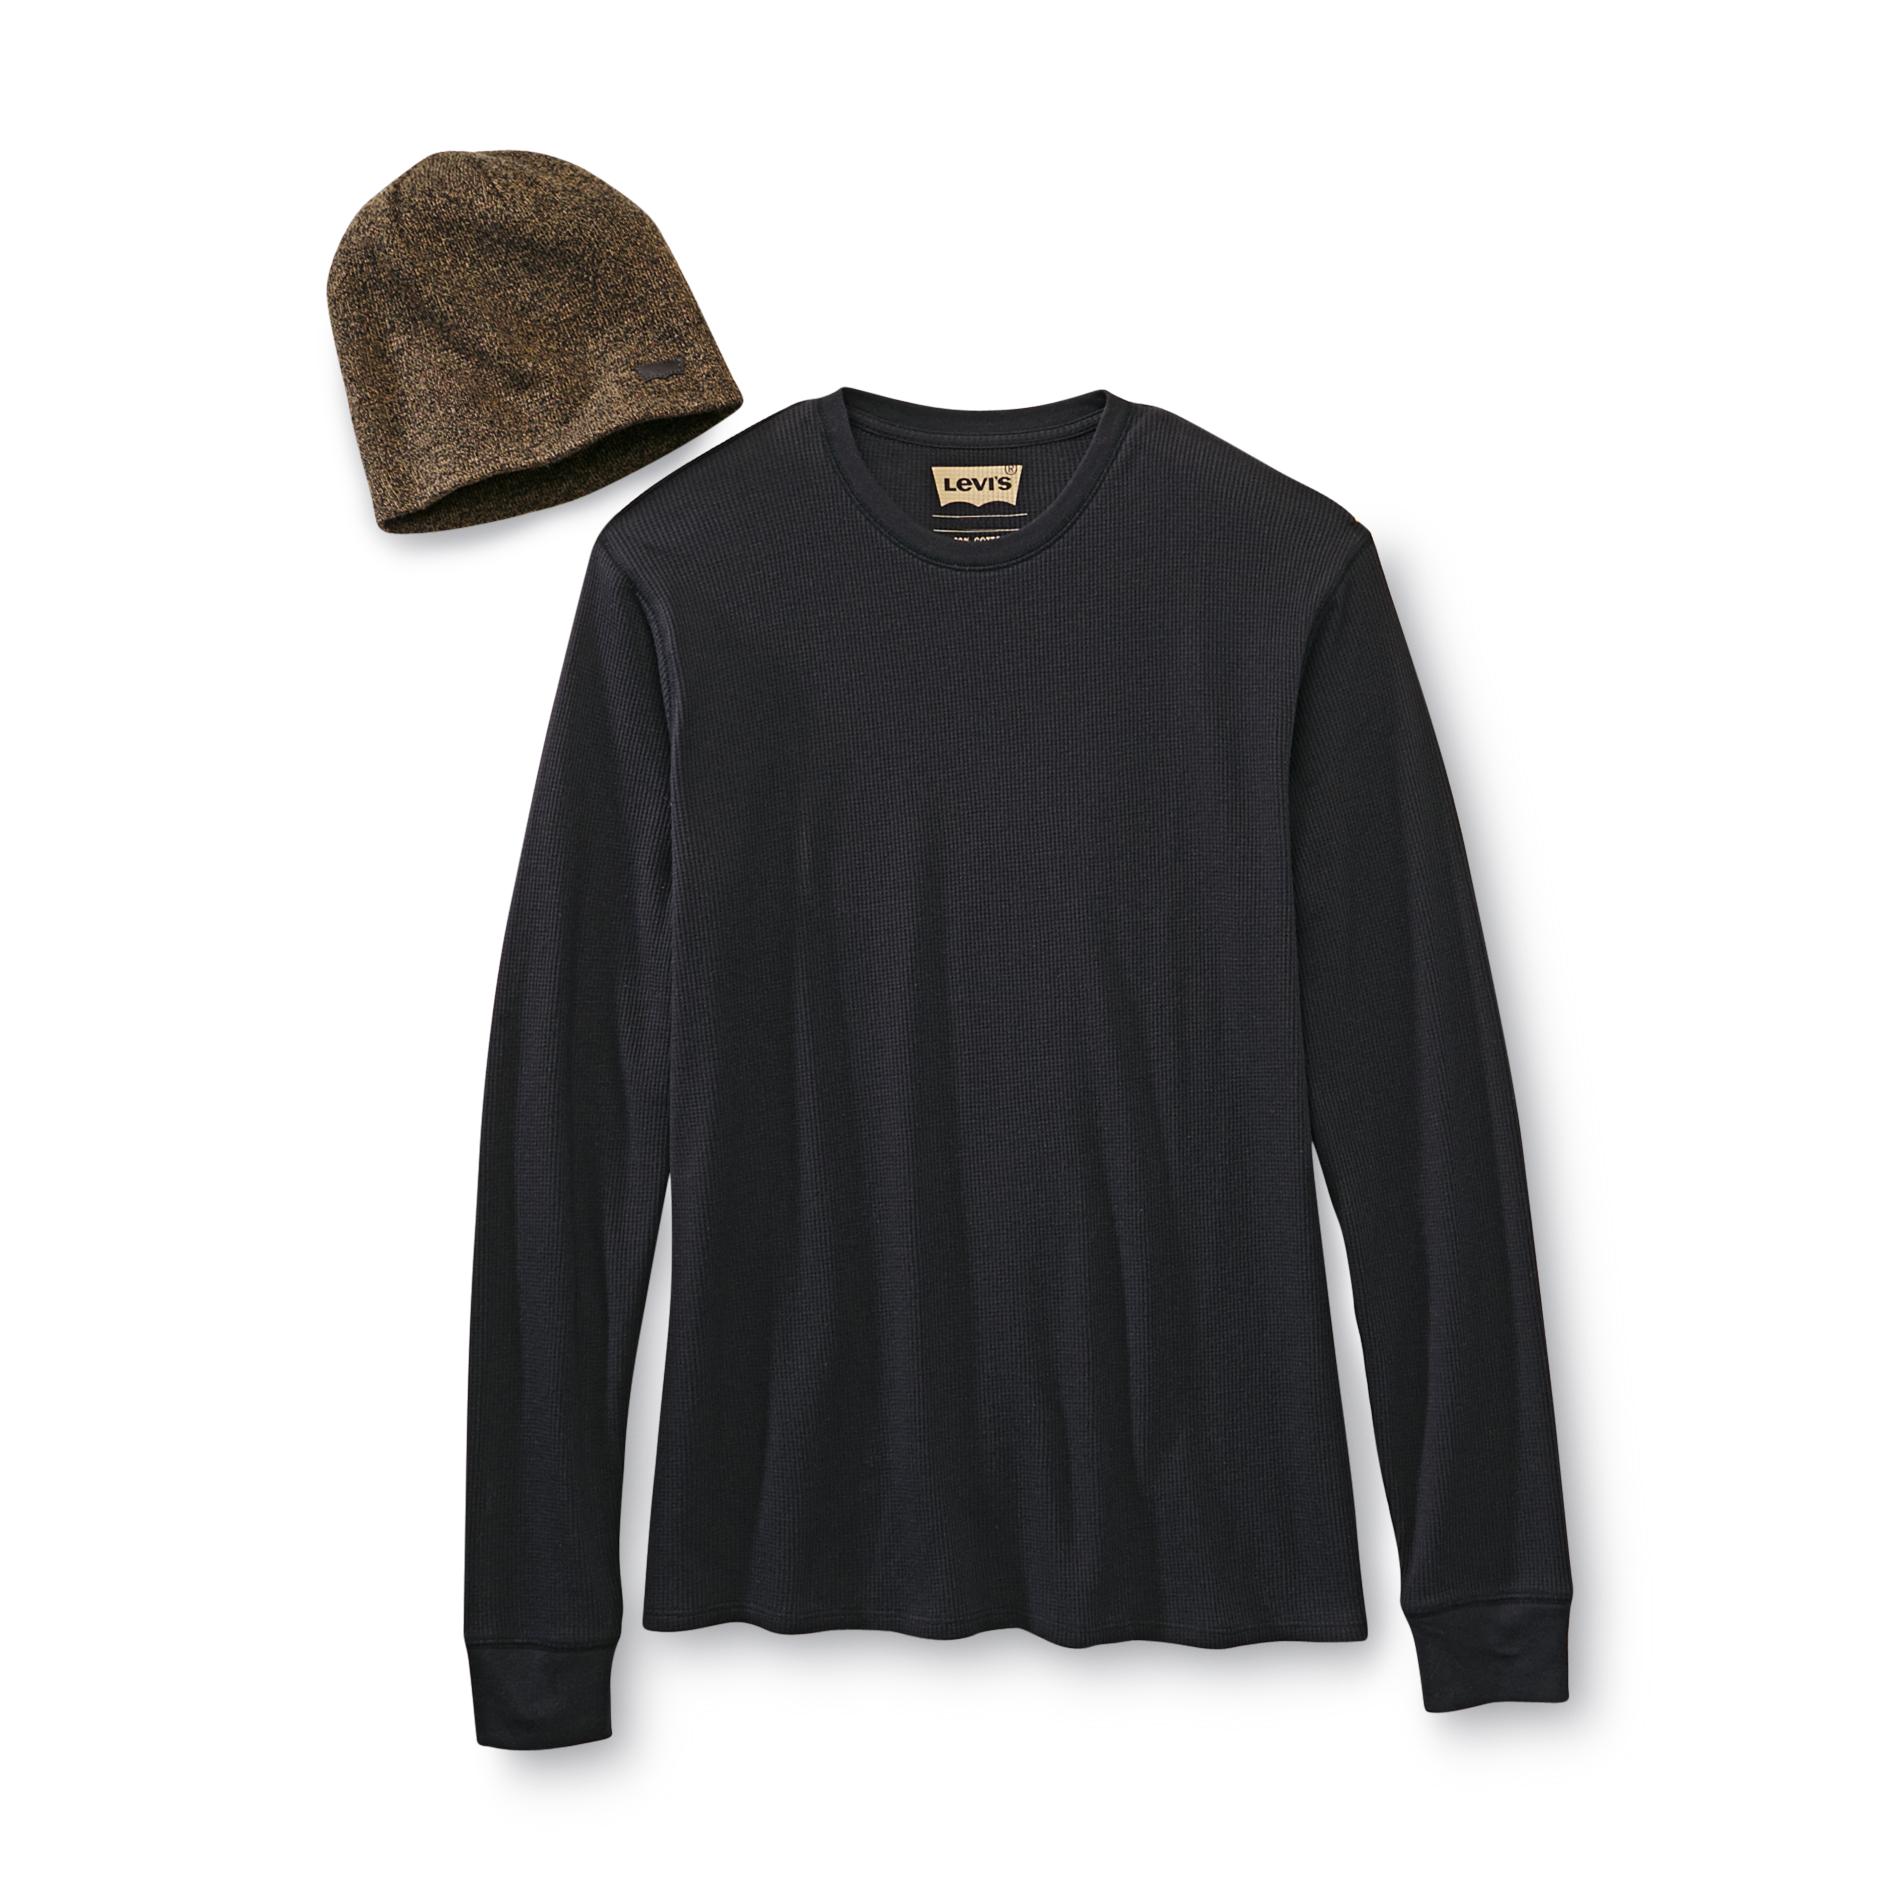 Levi's Men's Thermal Shirt & Knit Hat